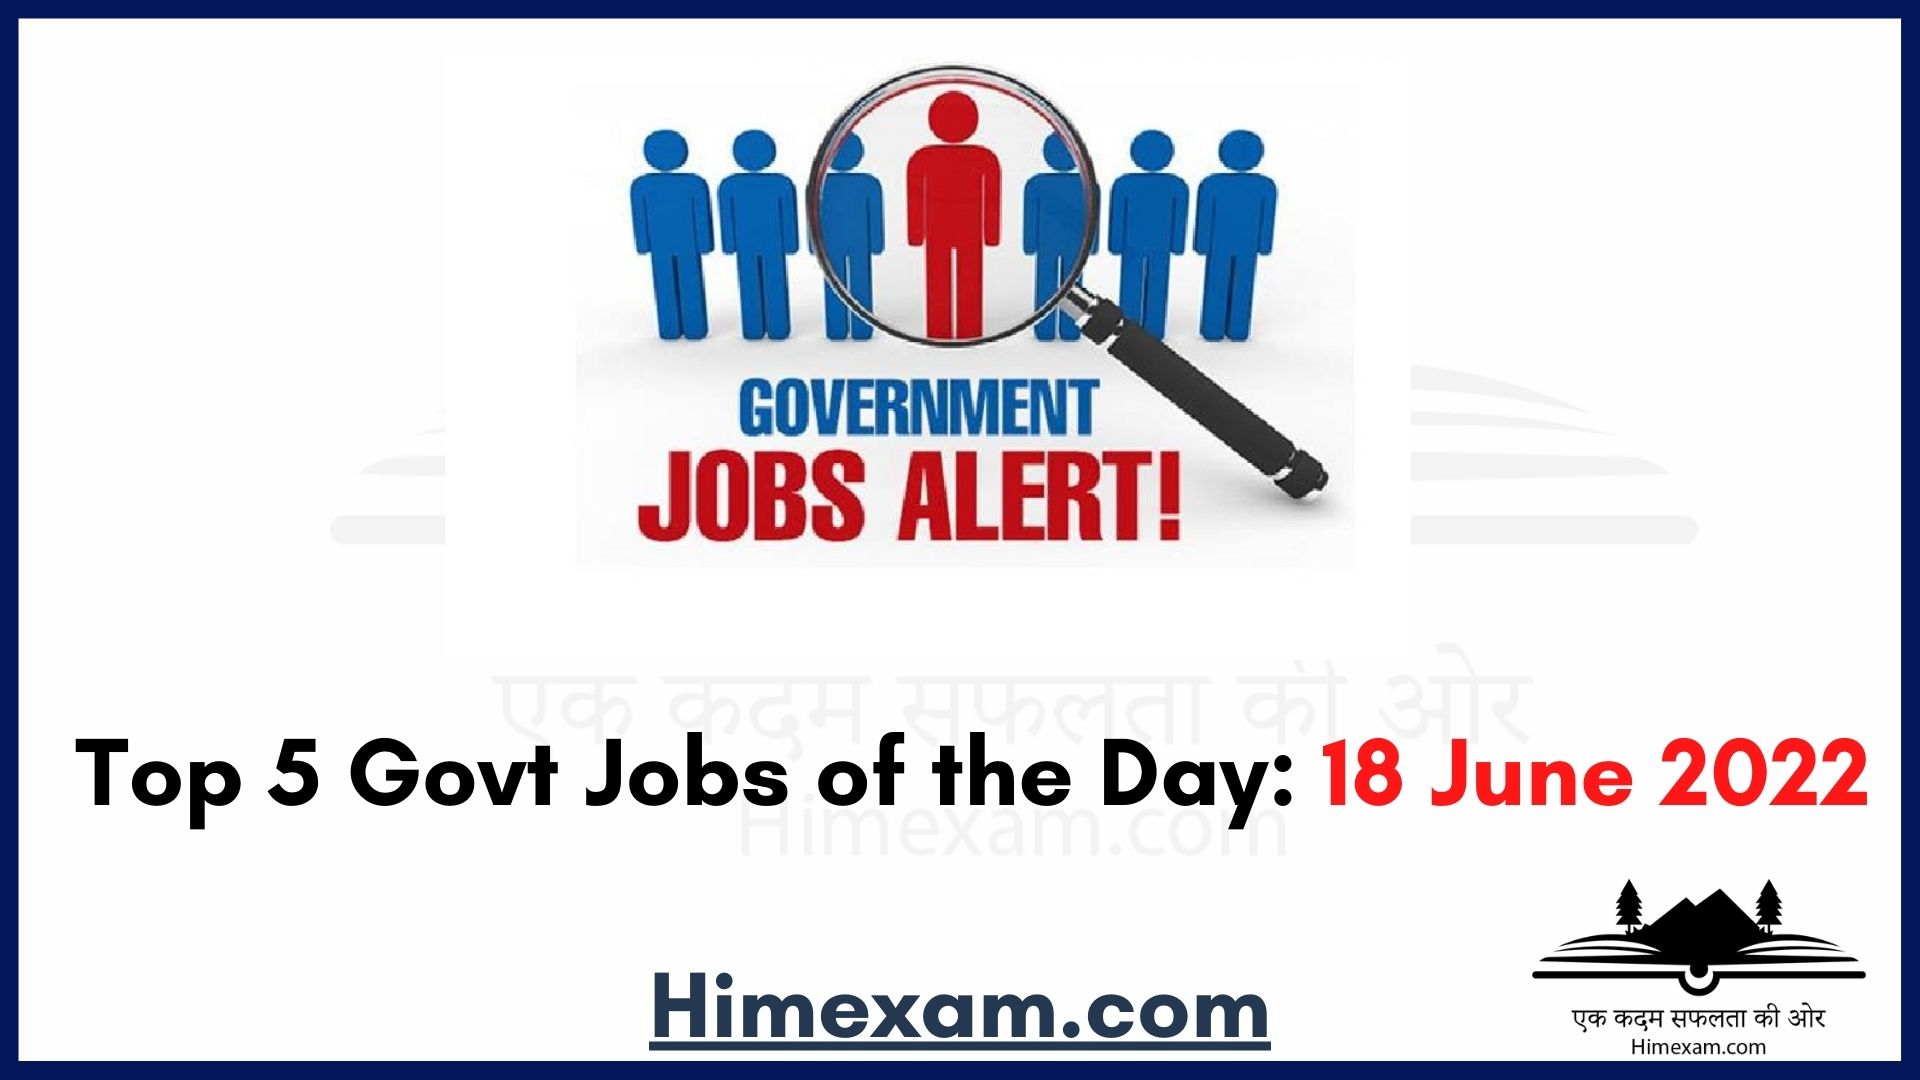 Top 5 Govt Jobs of the Day: 18 June 2022